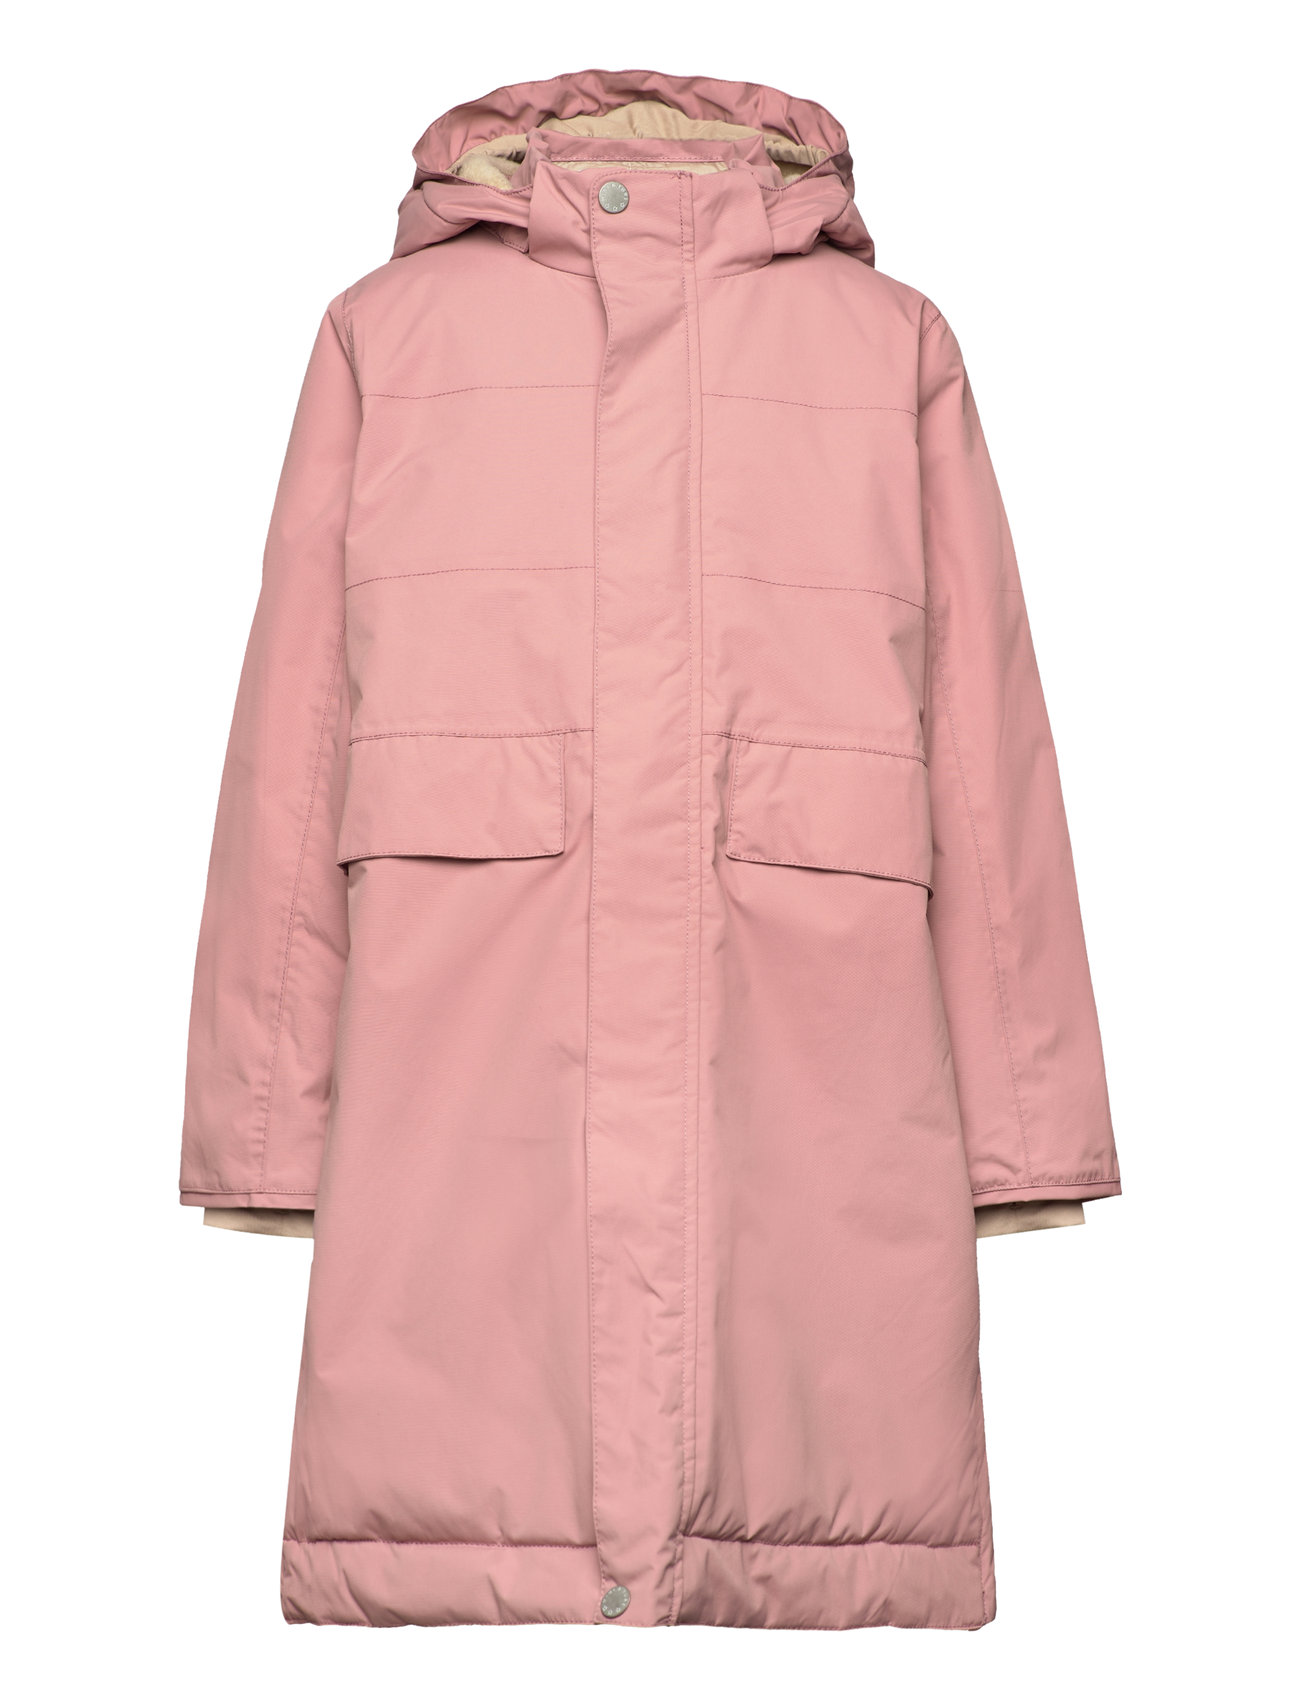 Vencasta Fleece Lined Winter Jacket. Grs Outerwear Jackets & Coats Winter Jackets Pink Mini A Ture